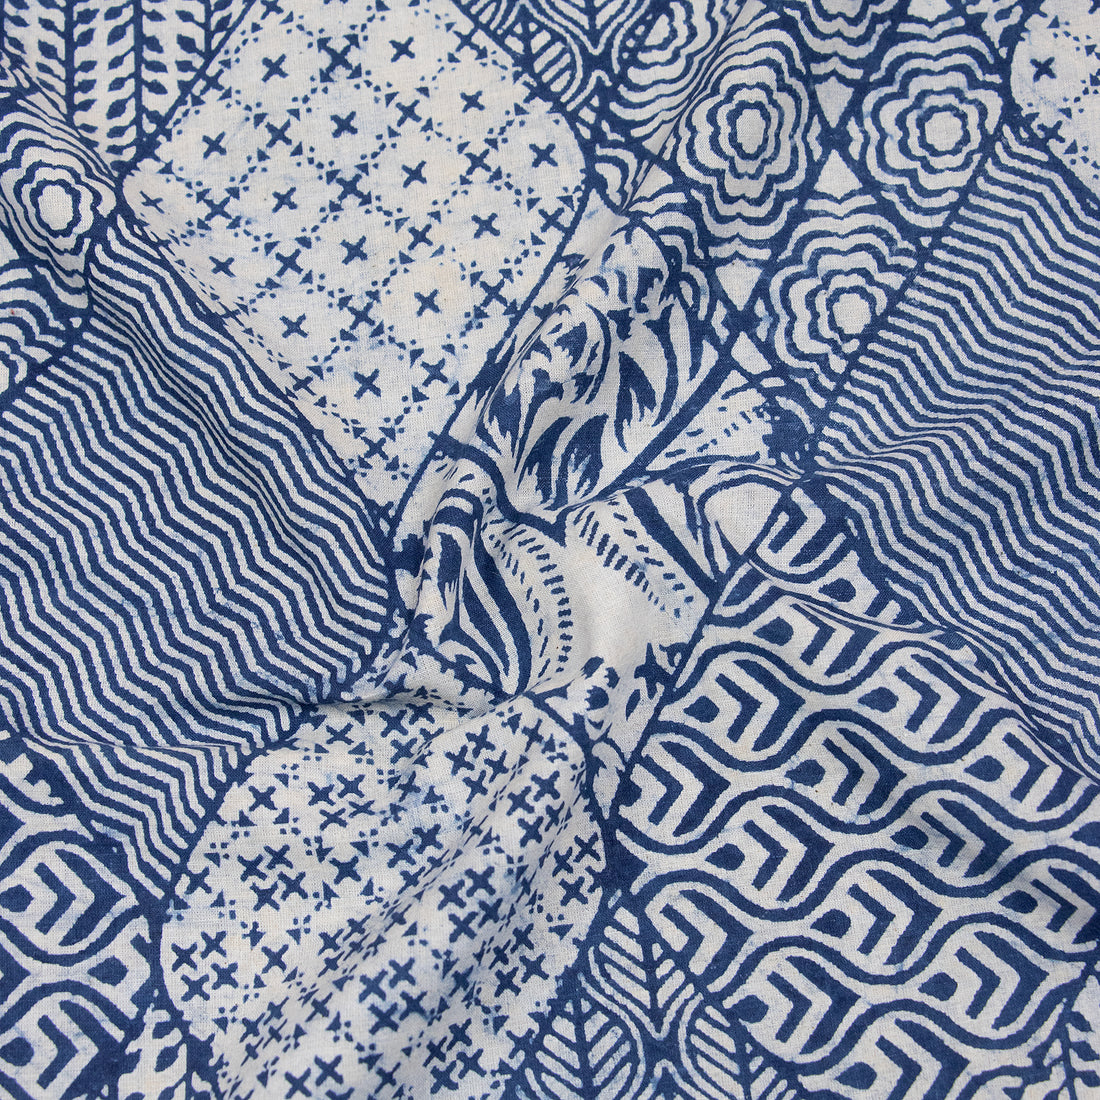 Ikat Block Printed Soft Indigo Cotton Fabric Online